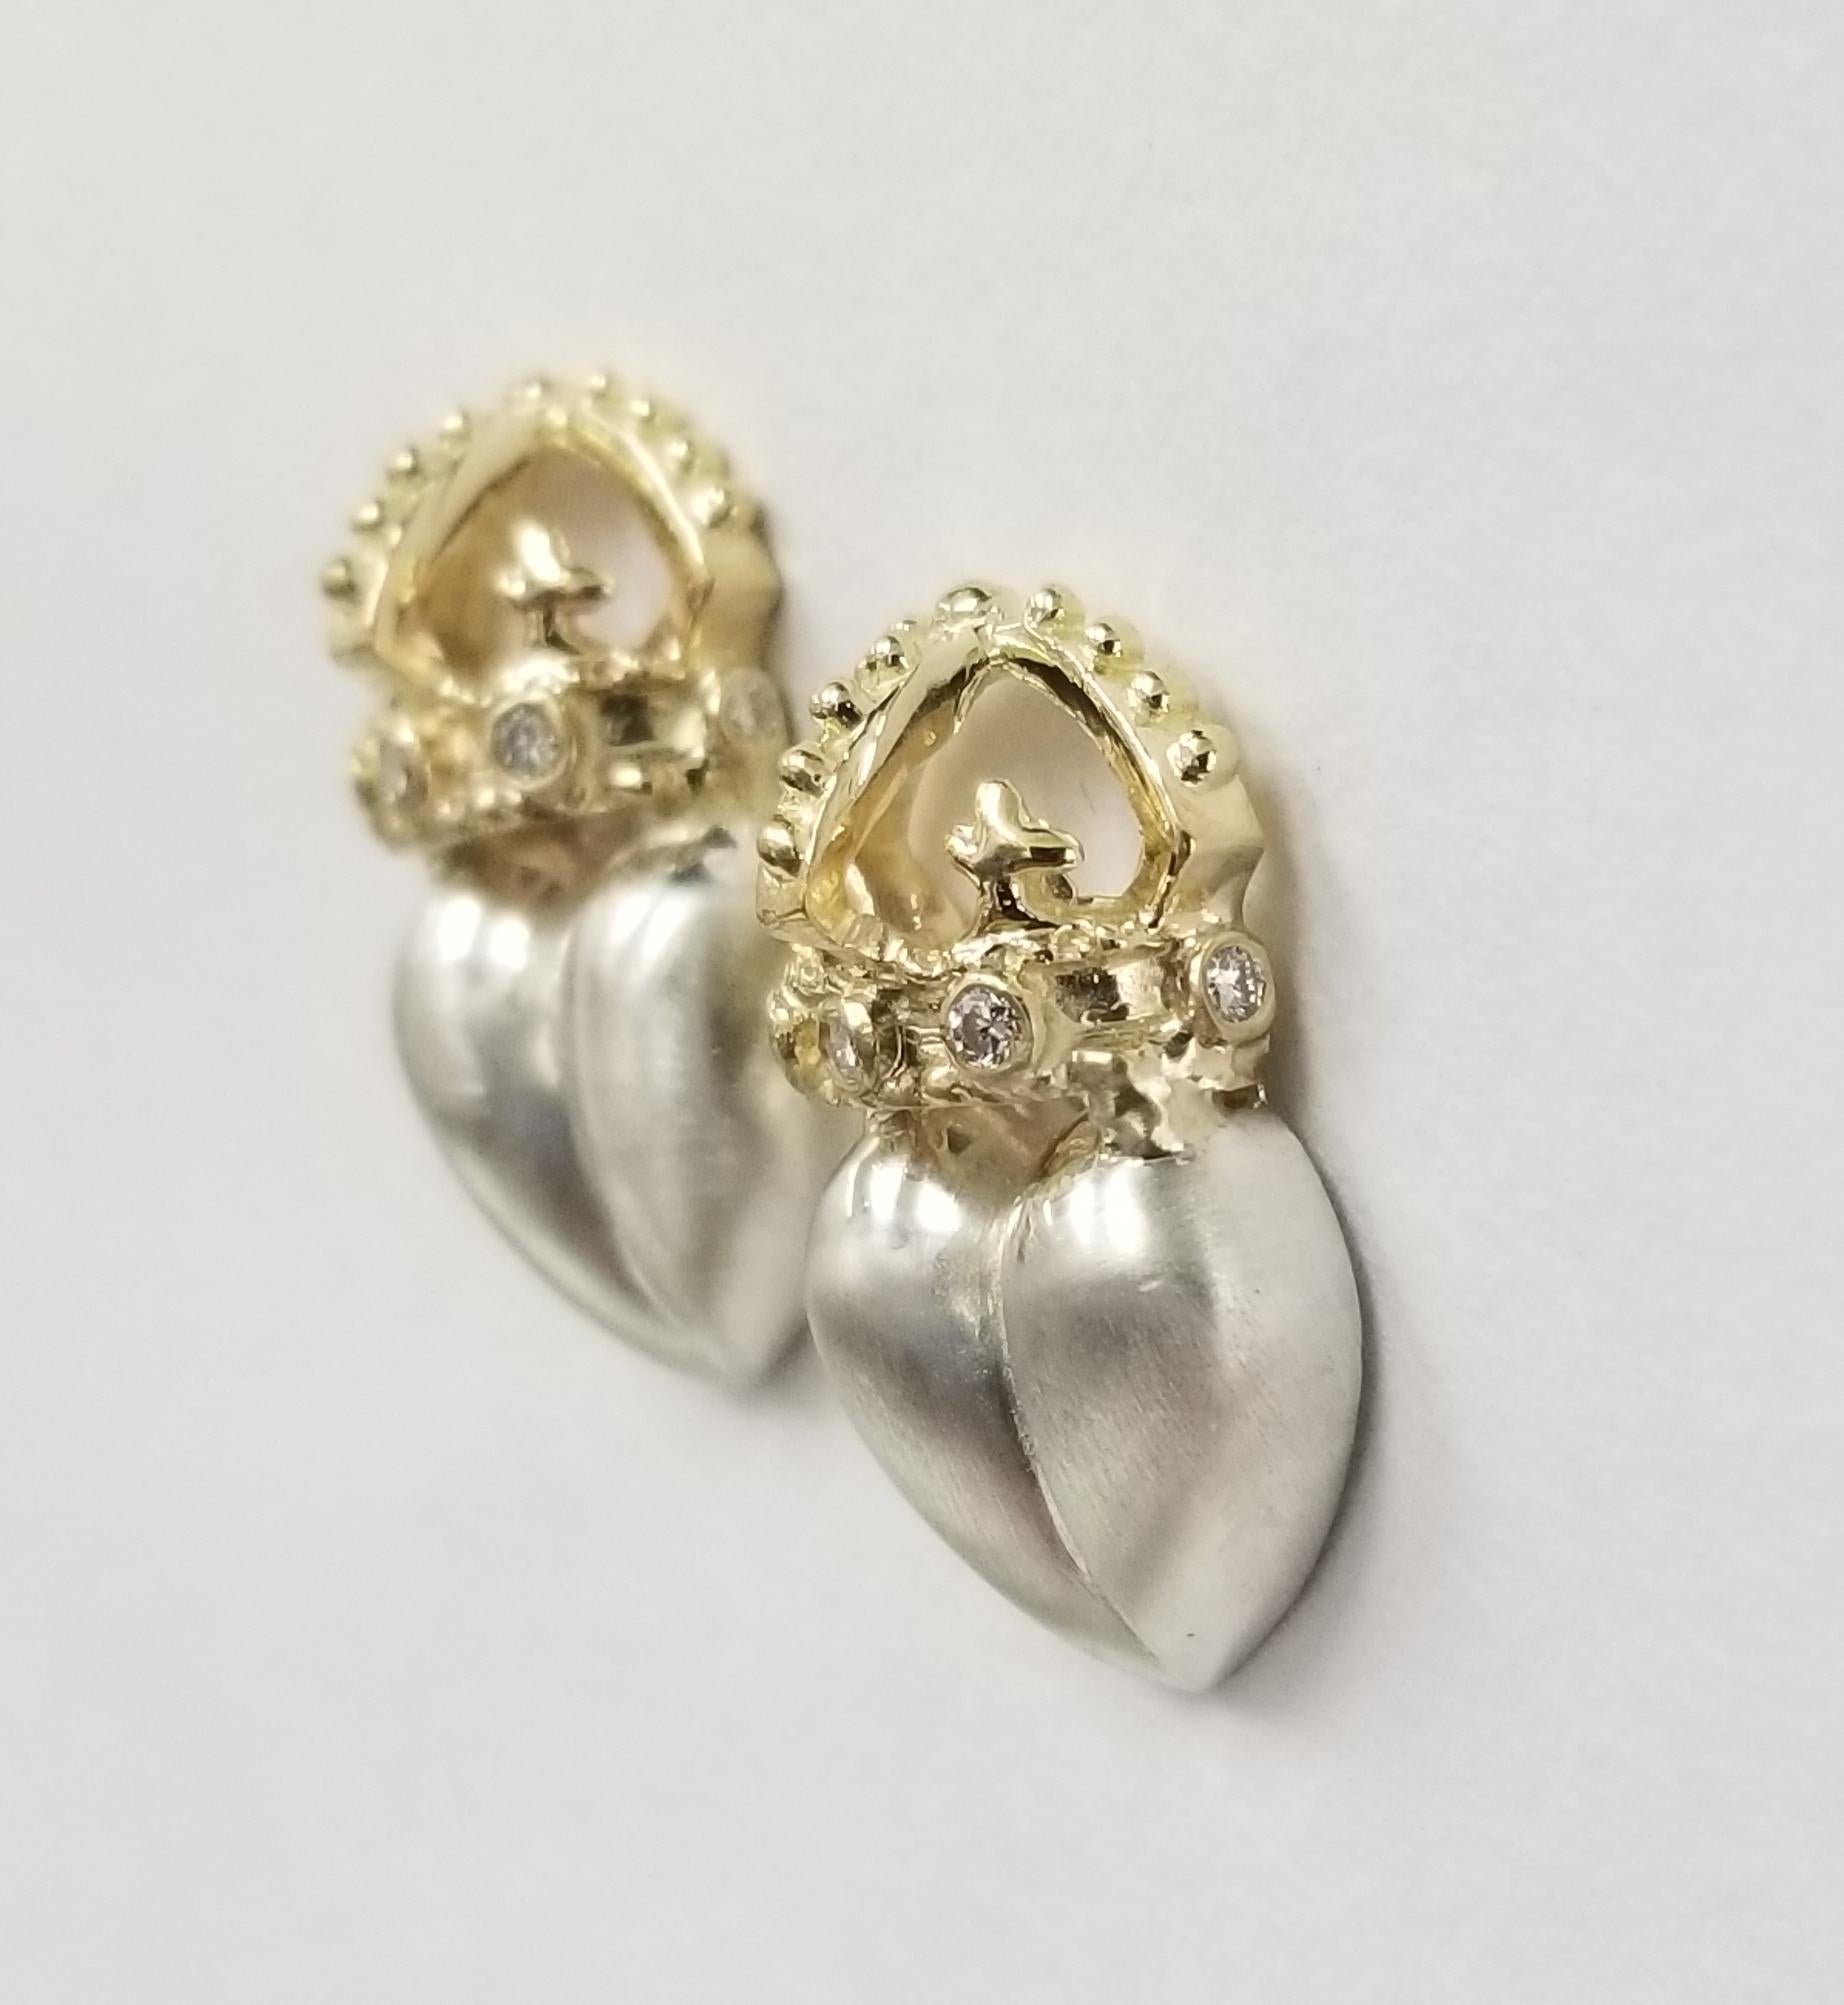 14k gold crown earrings